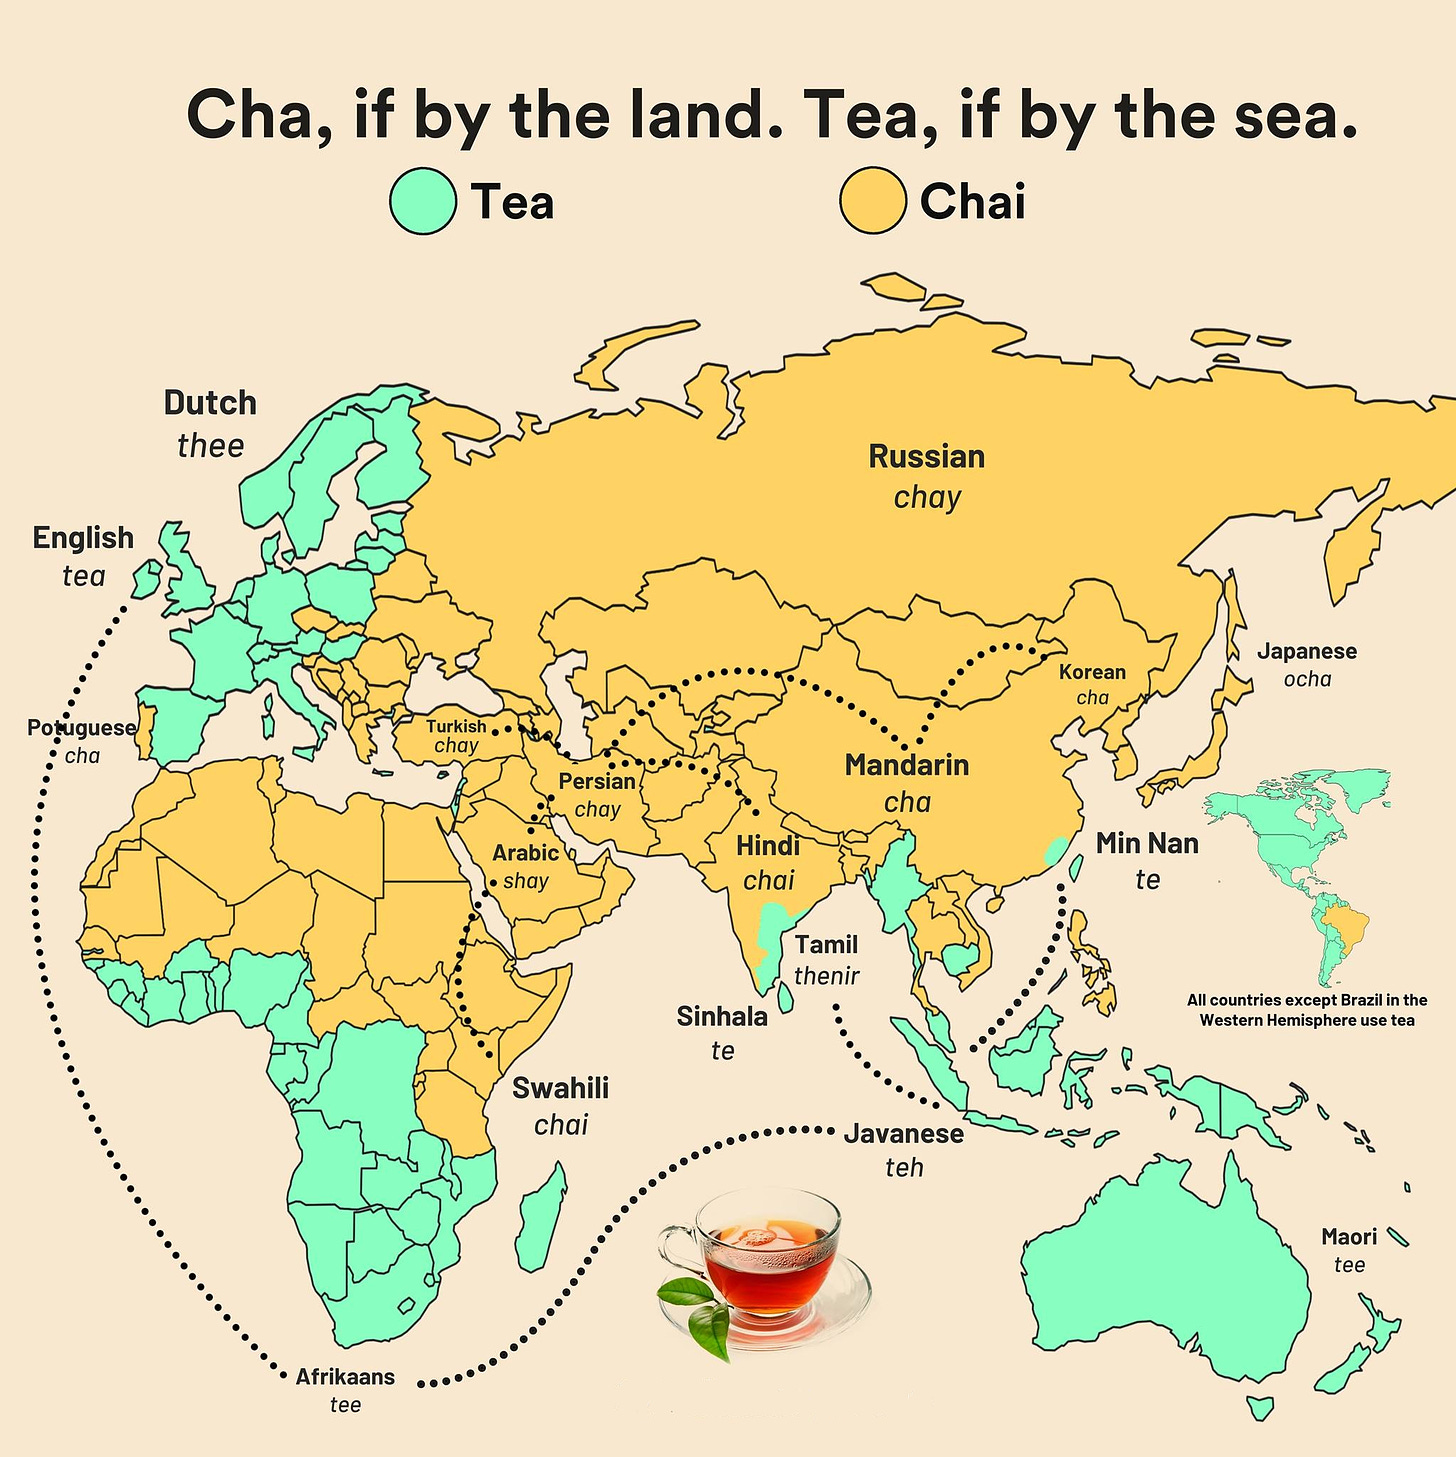 Tea vs Cha (short description in comments) : r/interestingasfuck